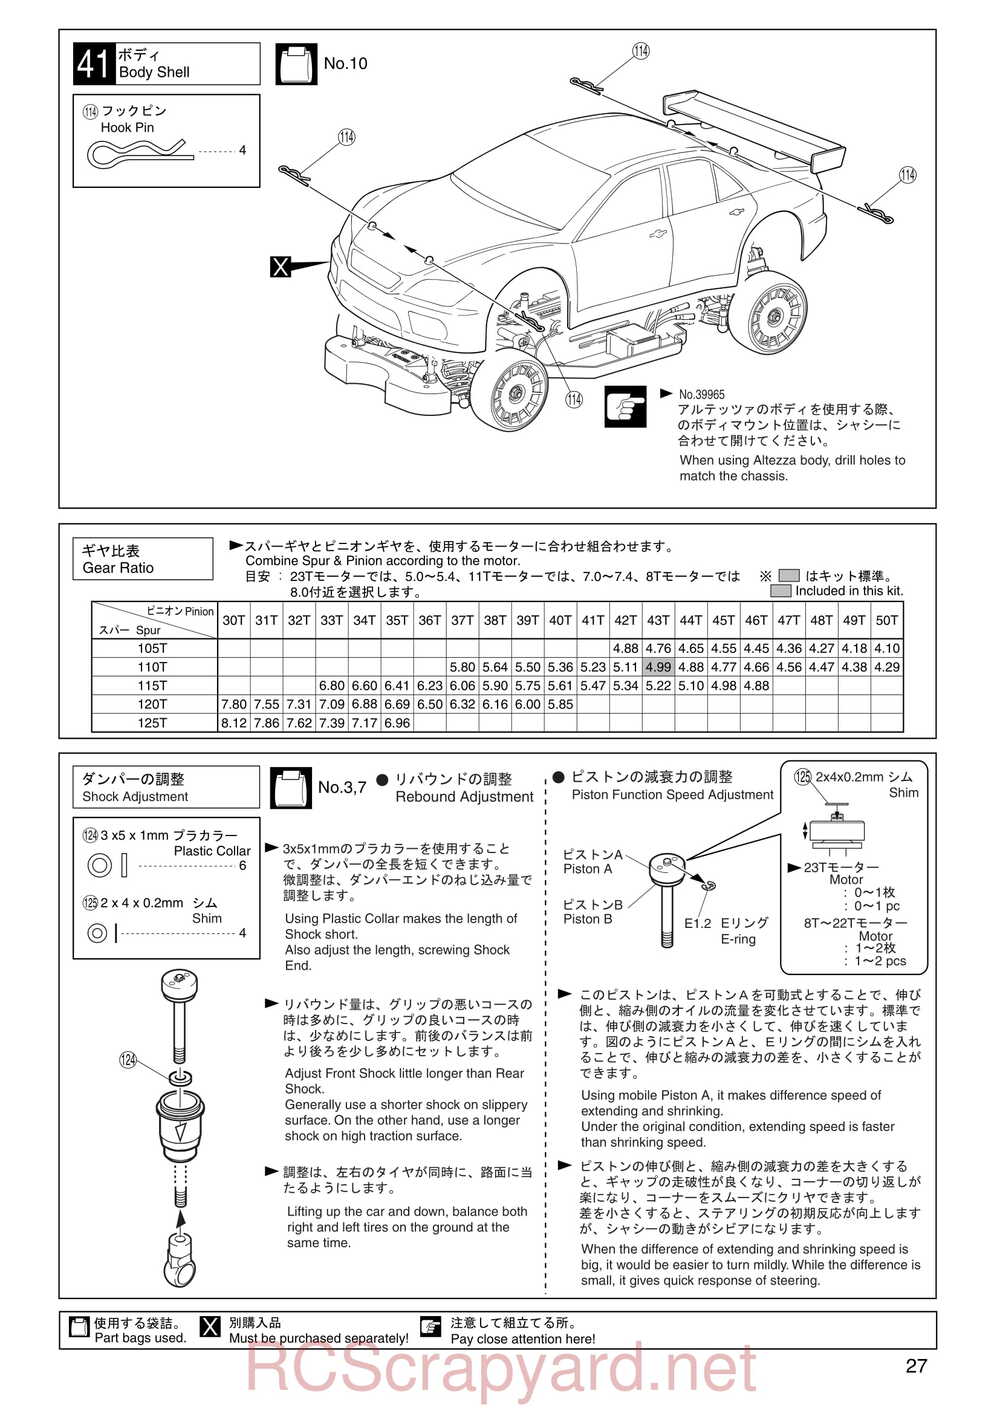 Kyosho - 30101 - KX-One - Manual - Page 27